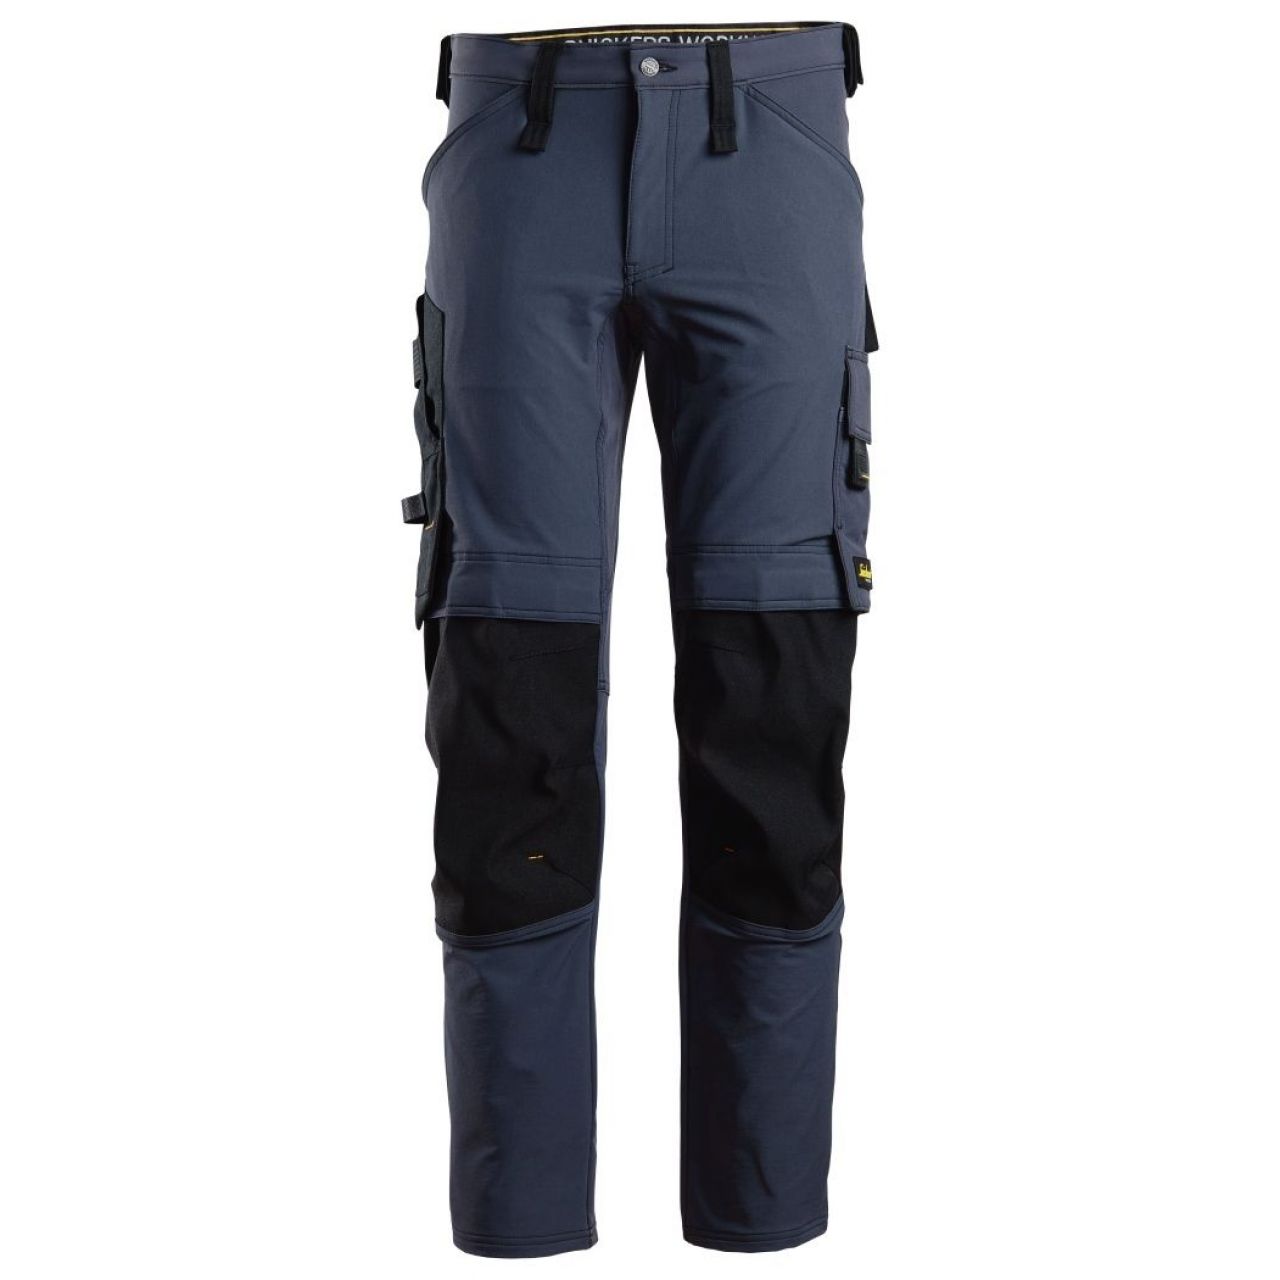 Pantalon elastico AllroundWork azul marino-negro talla 156